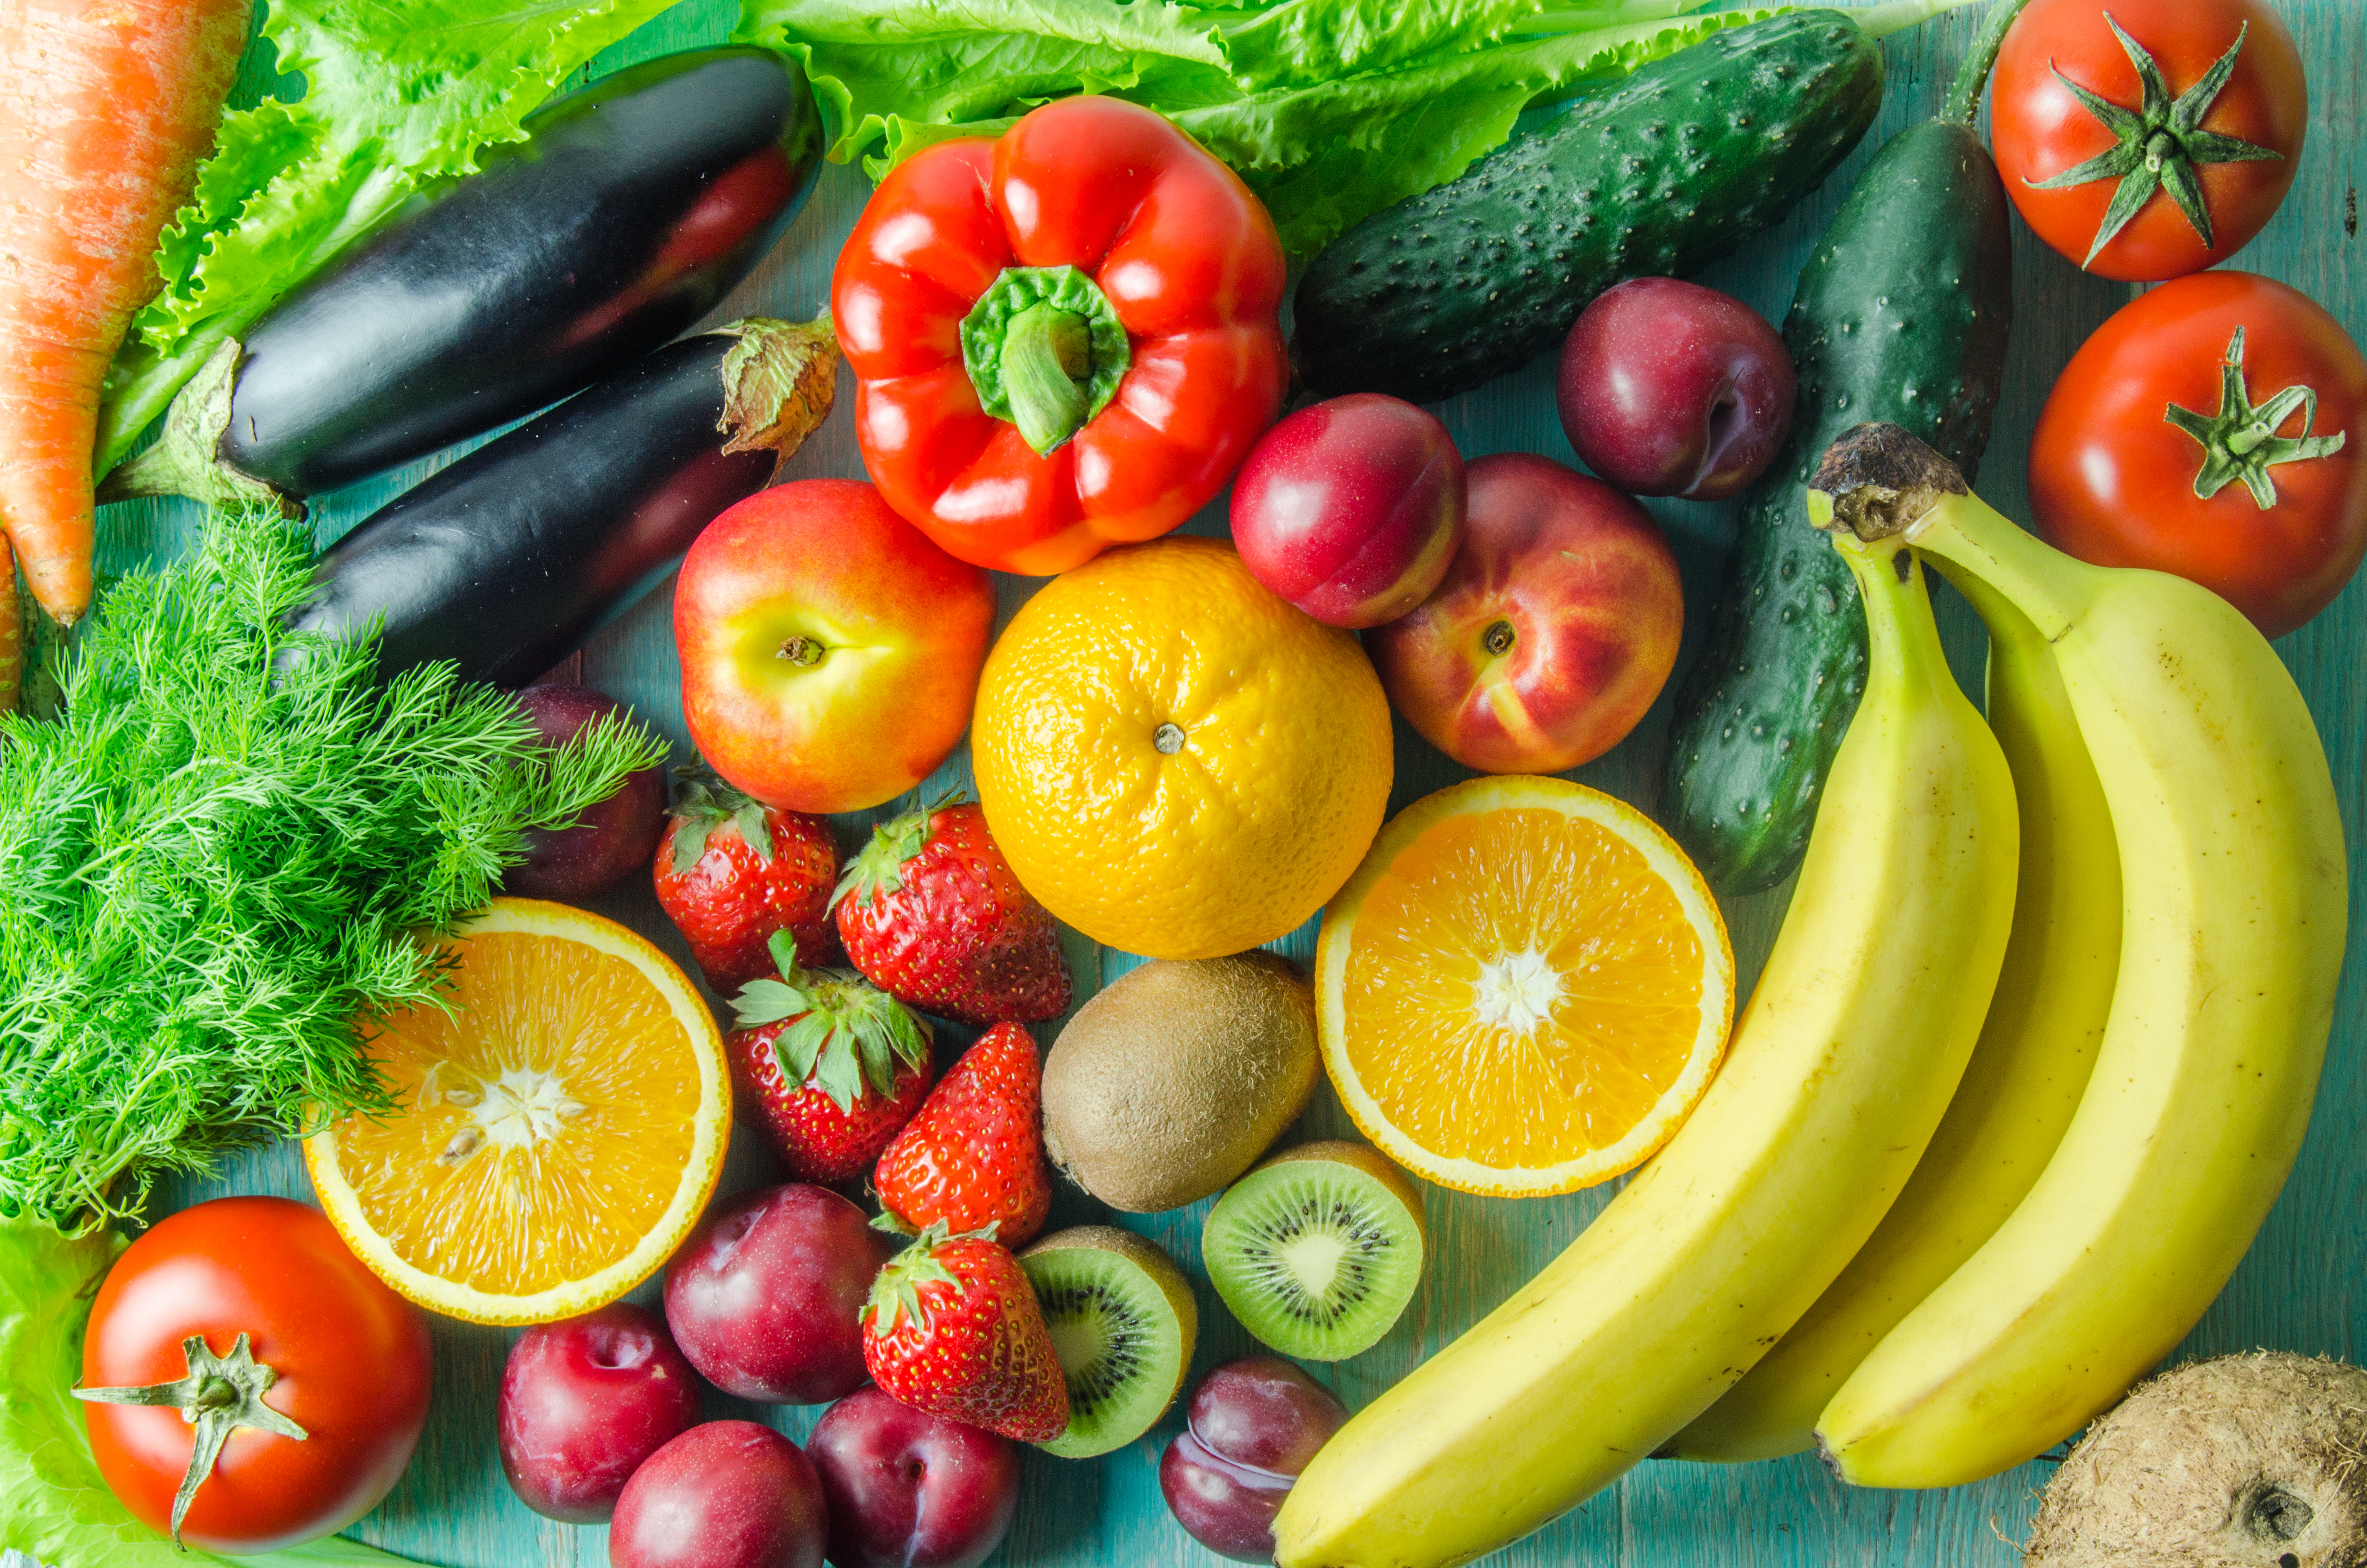 Bizarre food play inserting fruit veggies